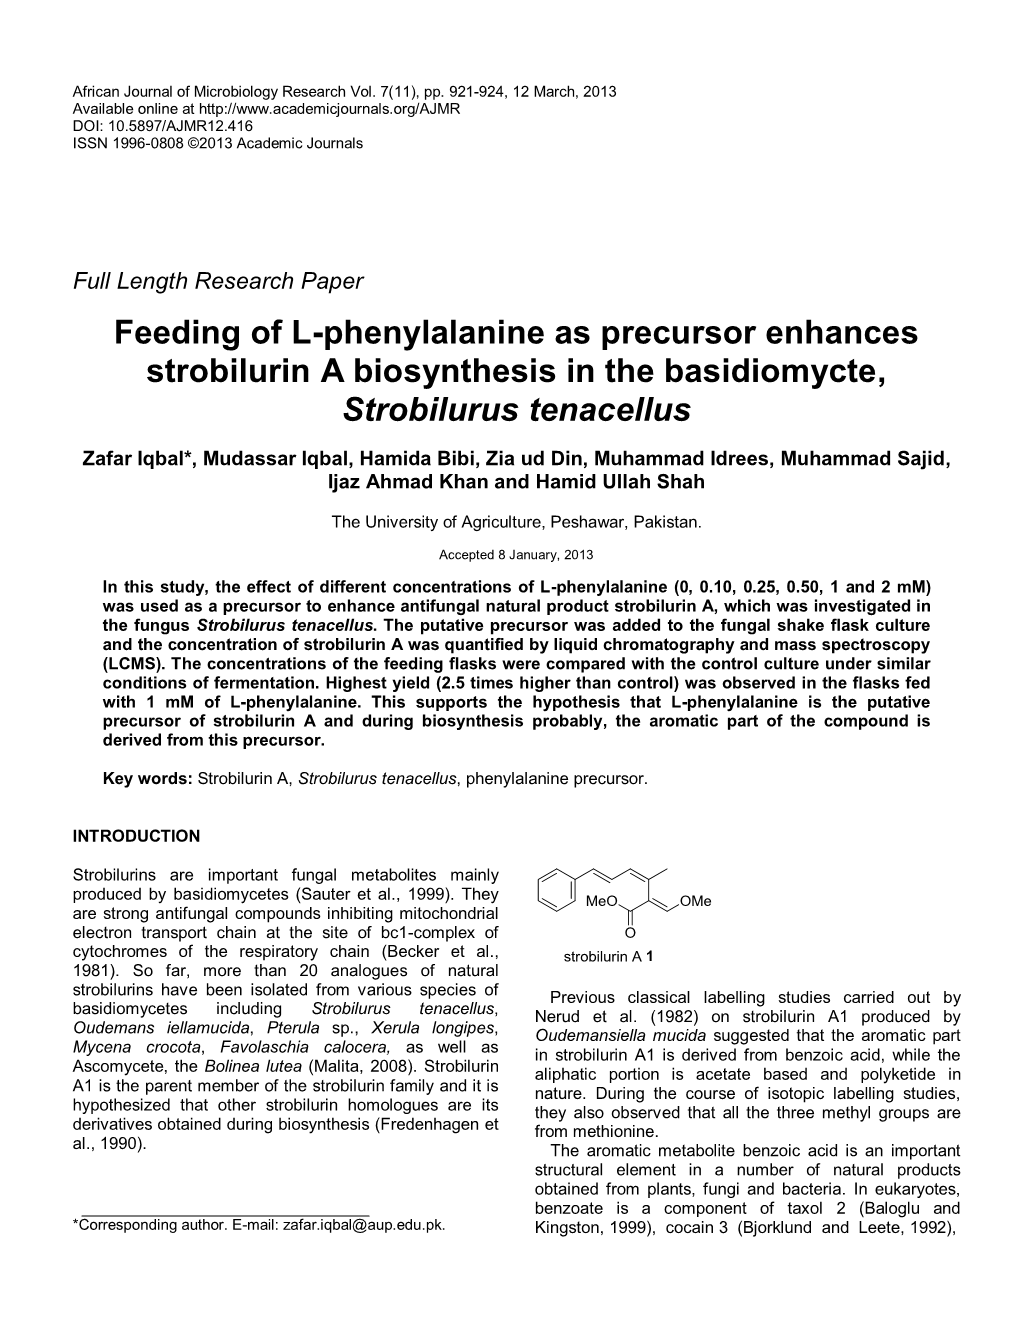 Feeding of L-Phenylalanine As Precursor Enhances Strobilurin a Biosynthesis in the Basidiomycte, Strobilurus Tenacellus